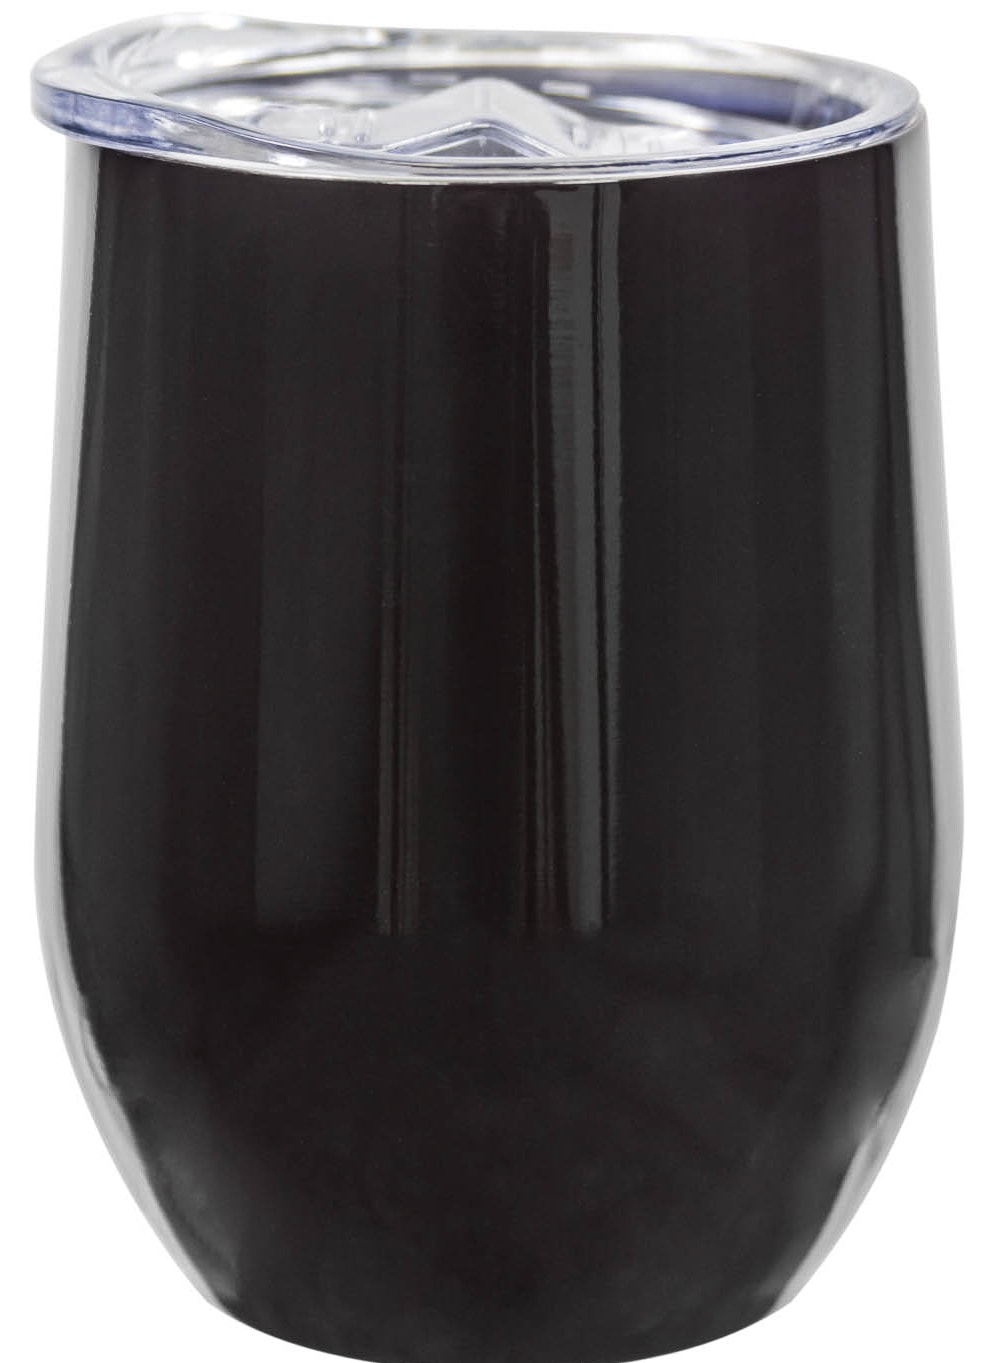 12oz. Black Stainless Steel Wine Tumbler by Celebrate It™